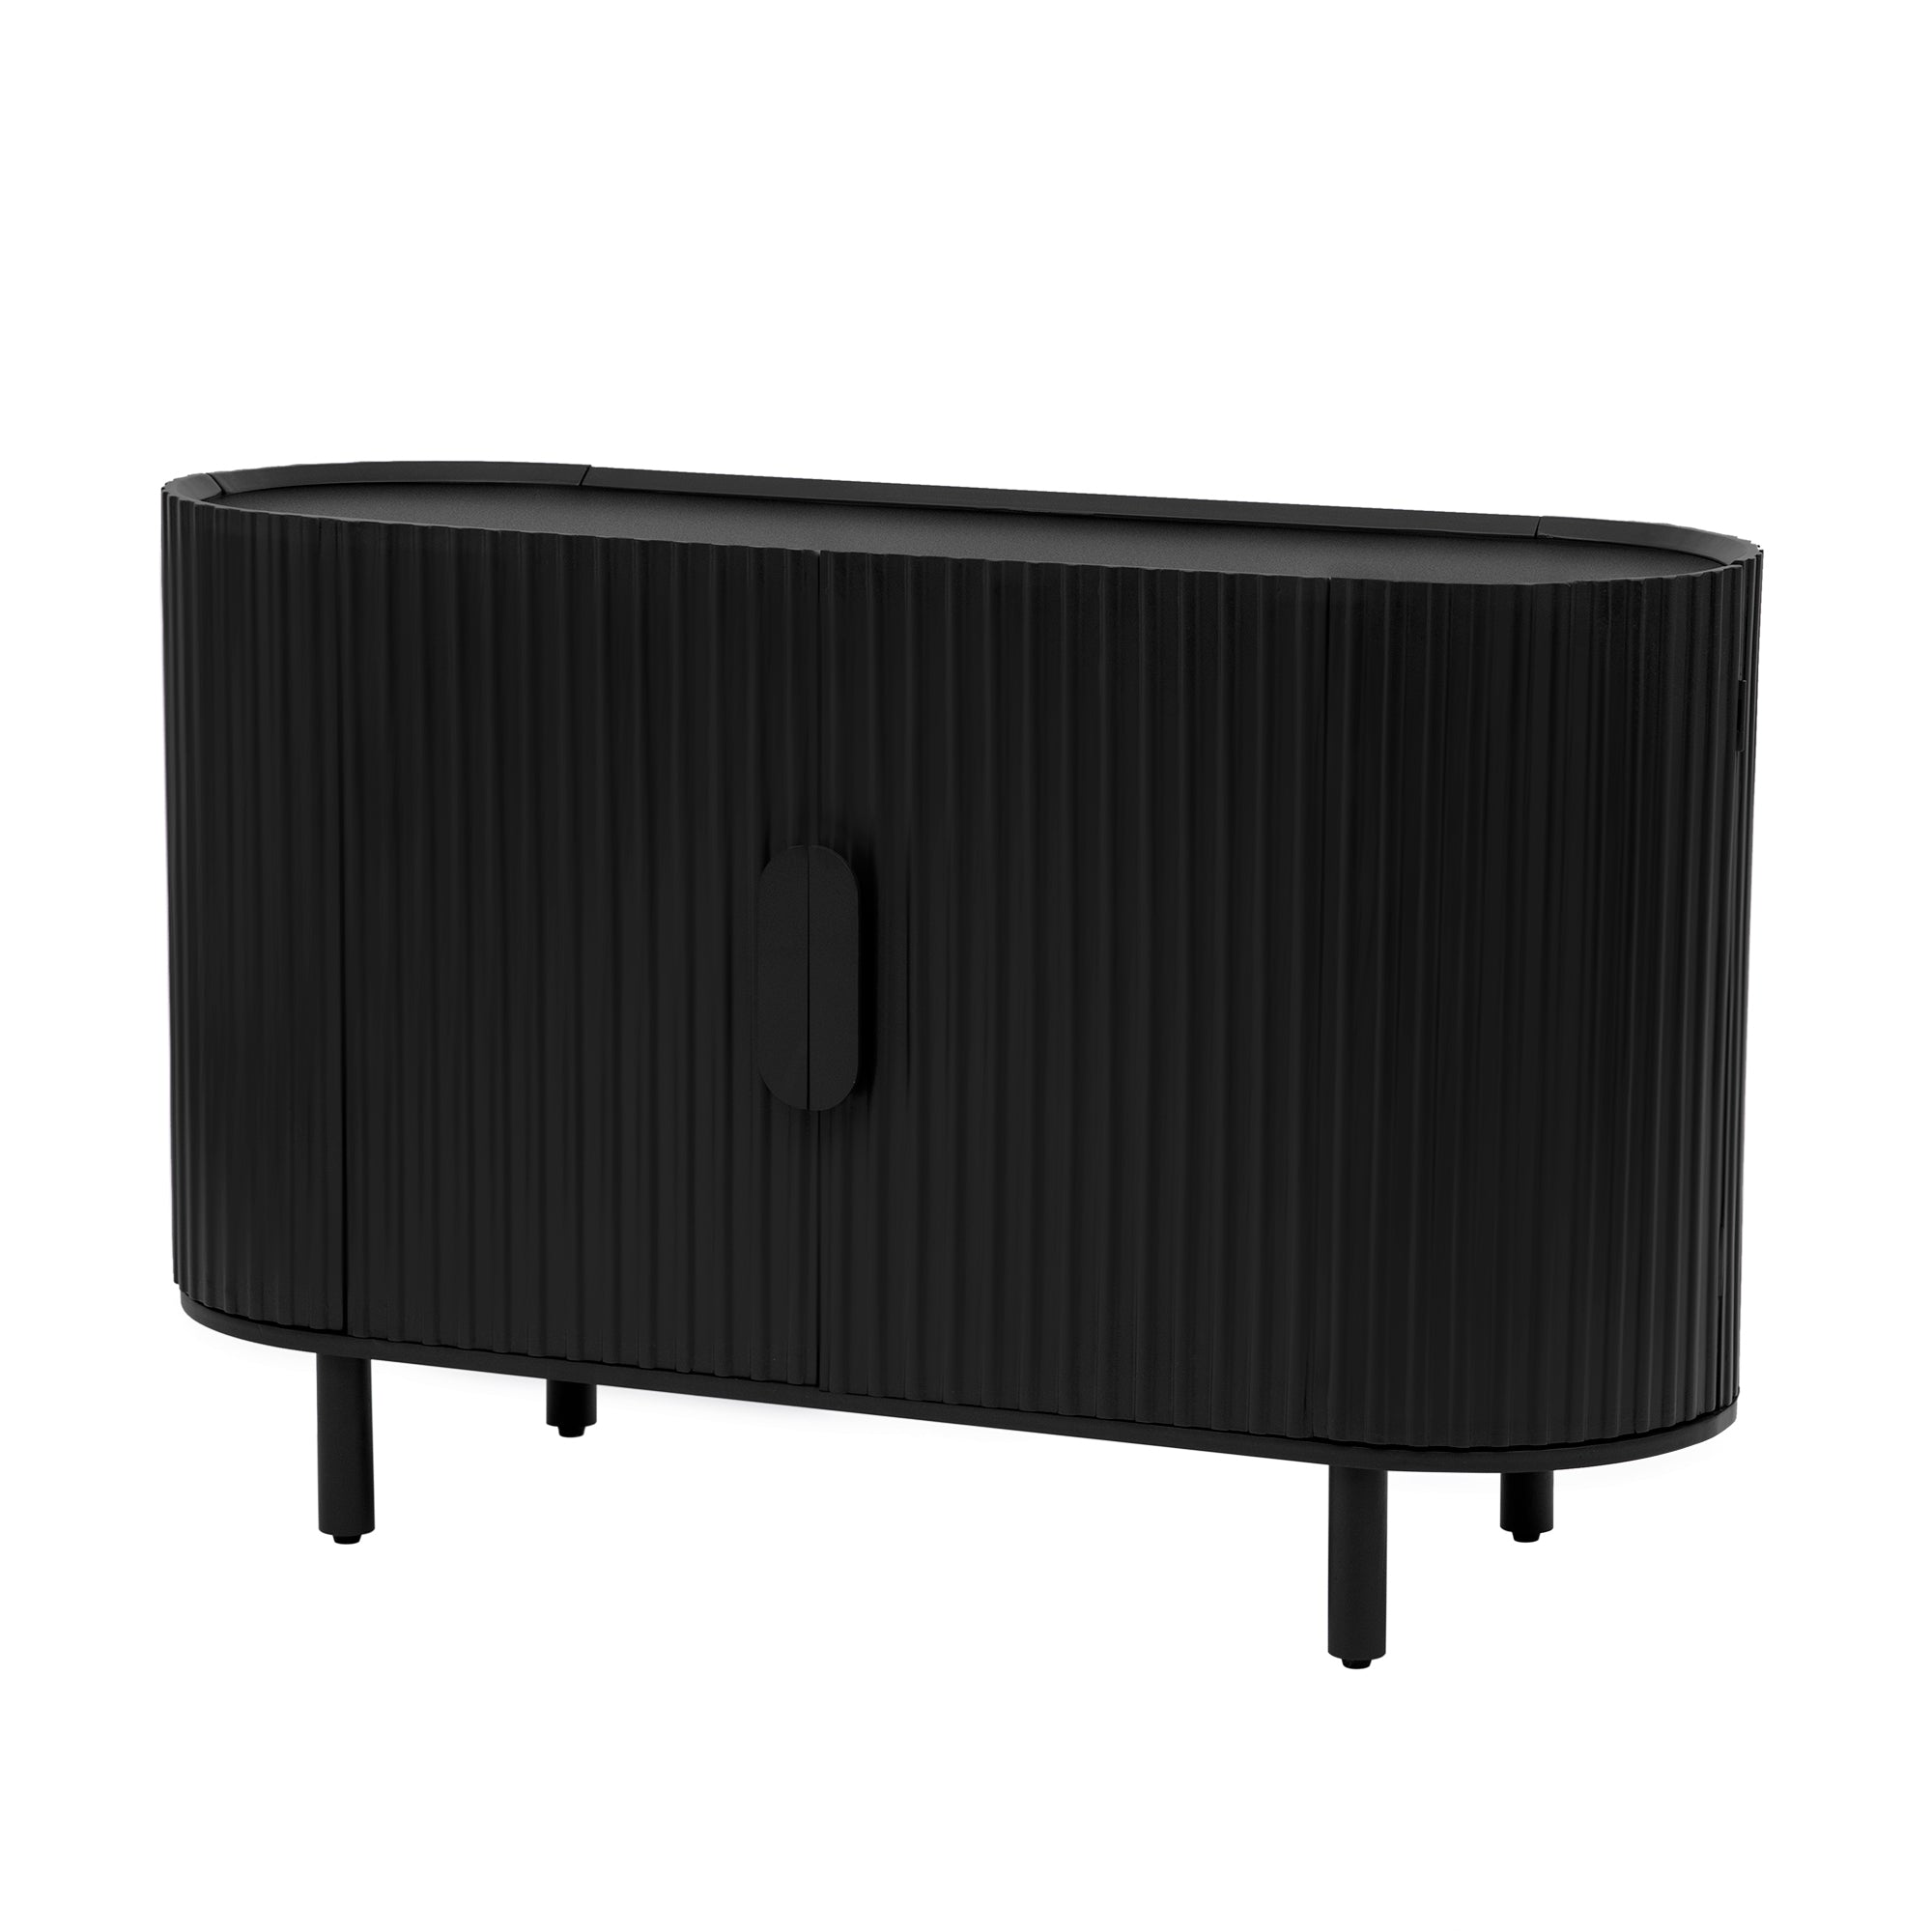 U Style Curved Design Light Luxury Sideboard with black-mdf